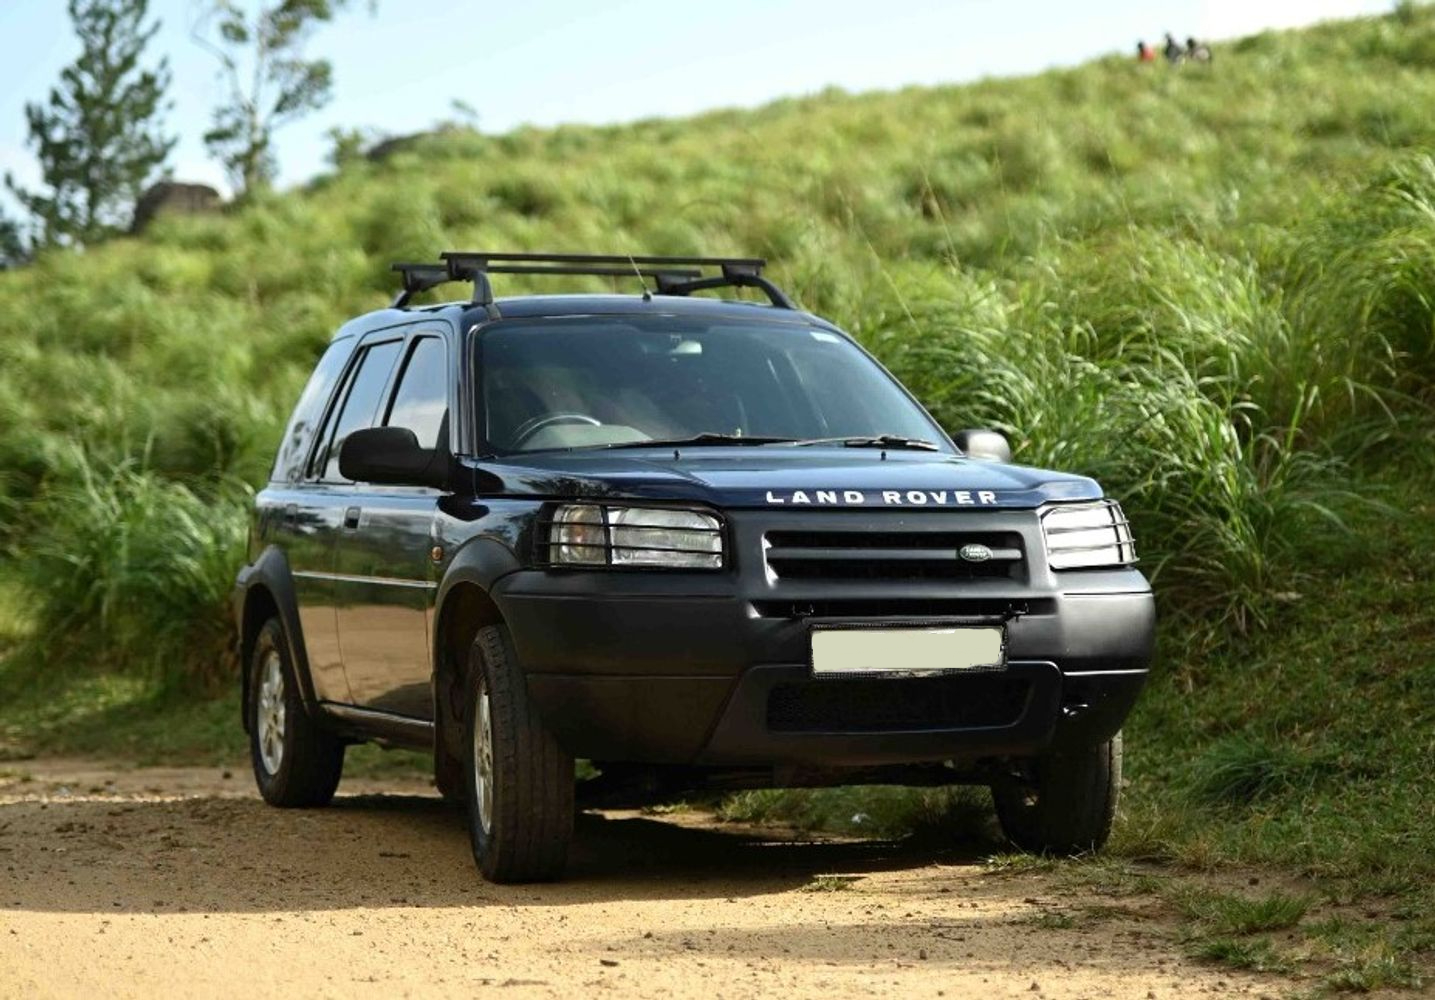 Land Rover Freelander 2000 Review